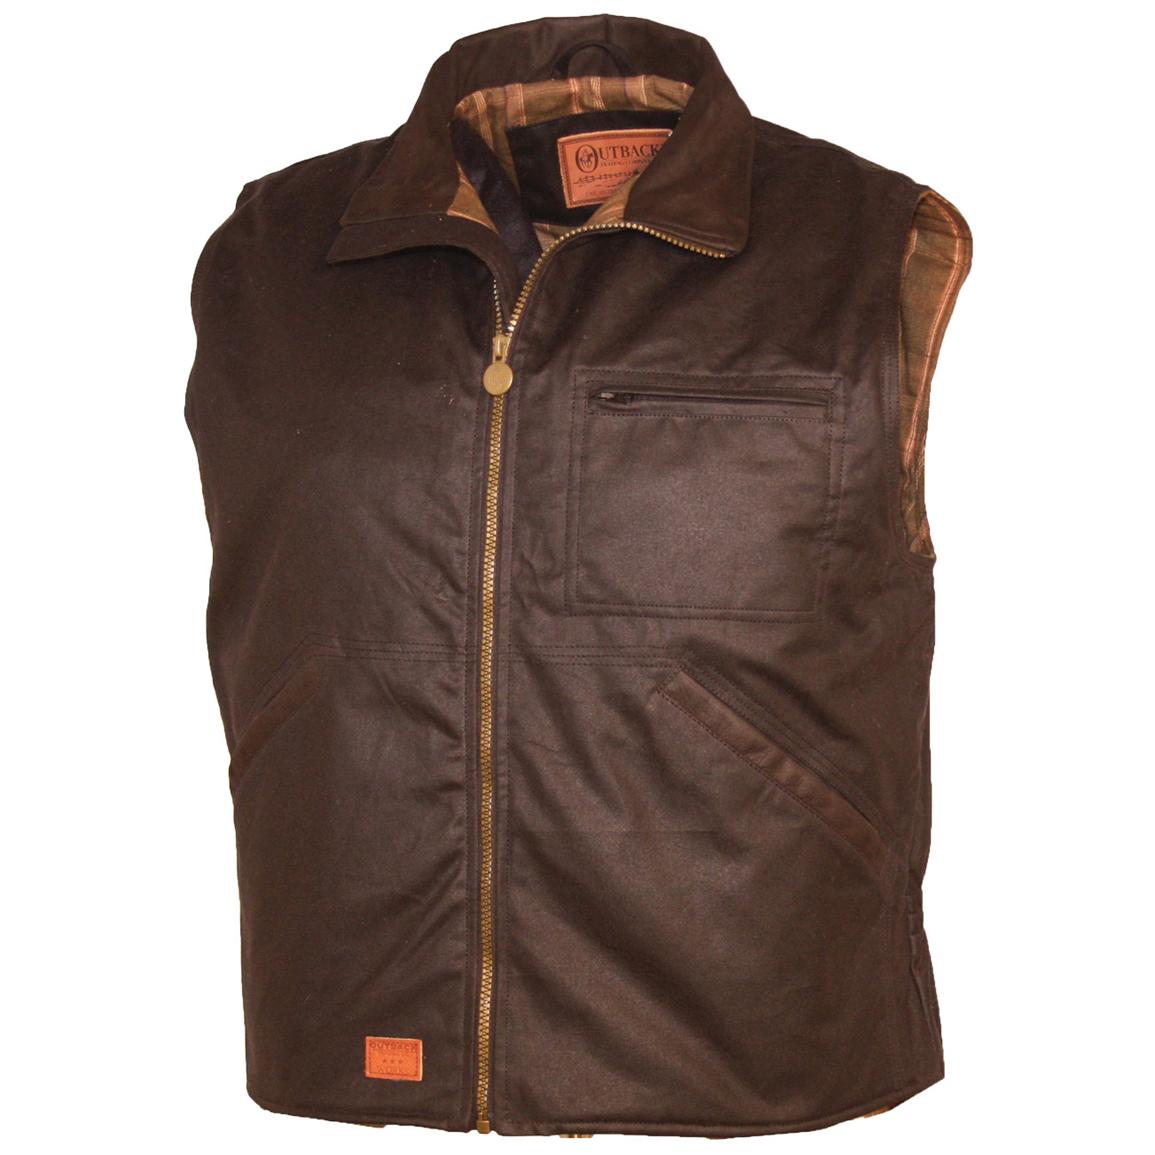 Outback Trading Company® Sawbuck Vest - 282438, Vests at Sportsman's 